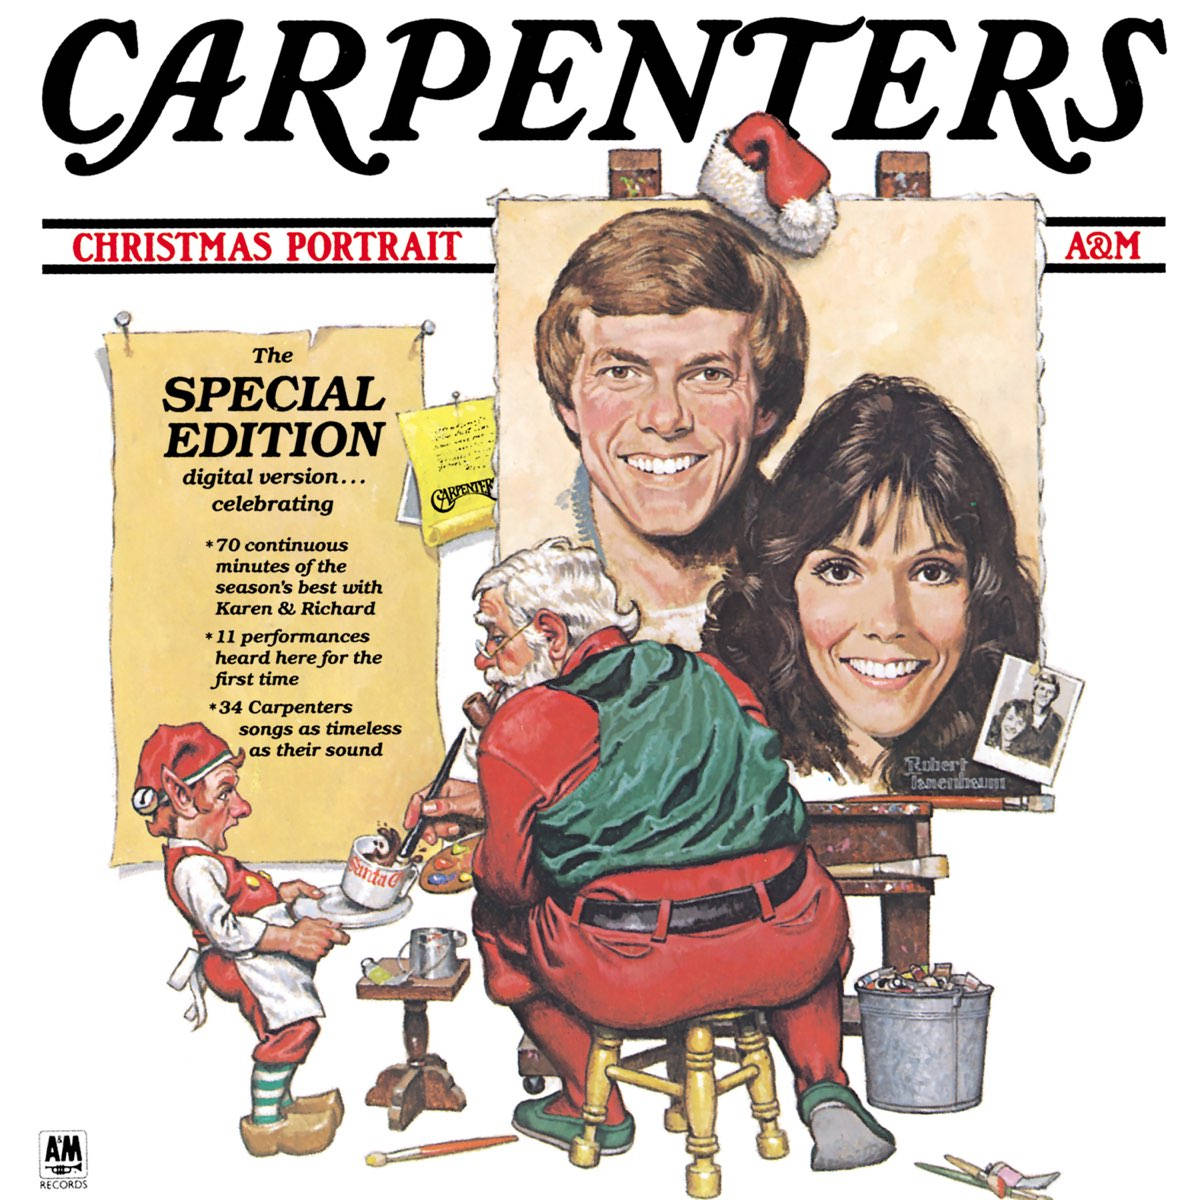 Carpentersweihnachts-portrait Album Cover 1978 Wallpaper